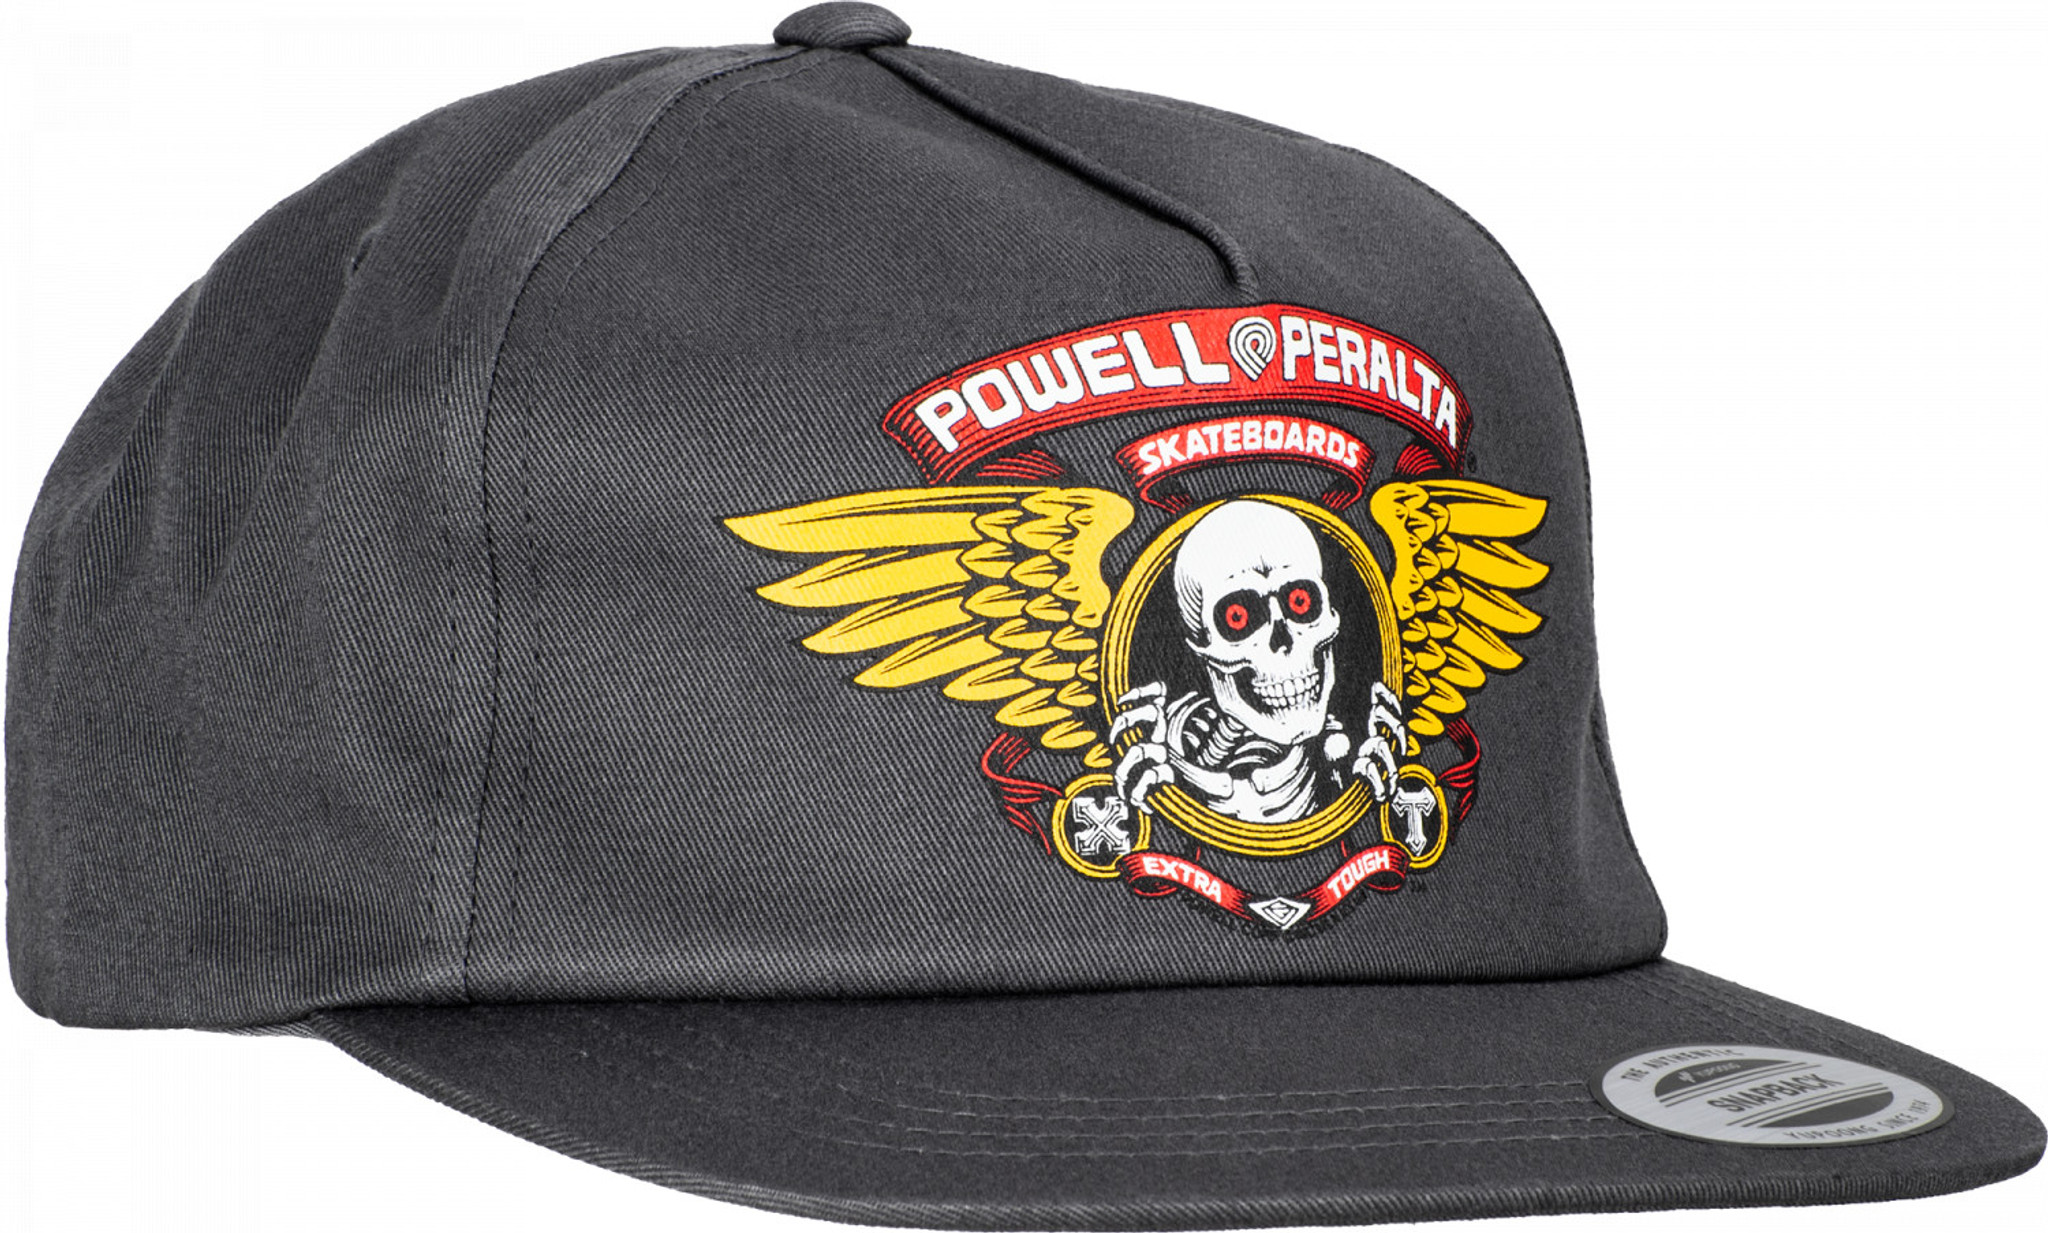 Powell Peralta Triple P Snapback Hat Navy - 845584093716